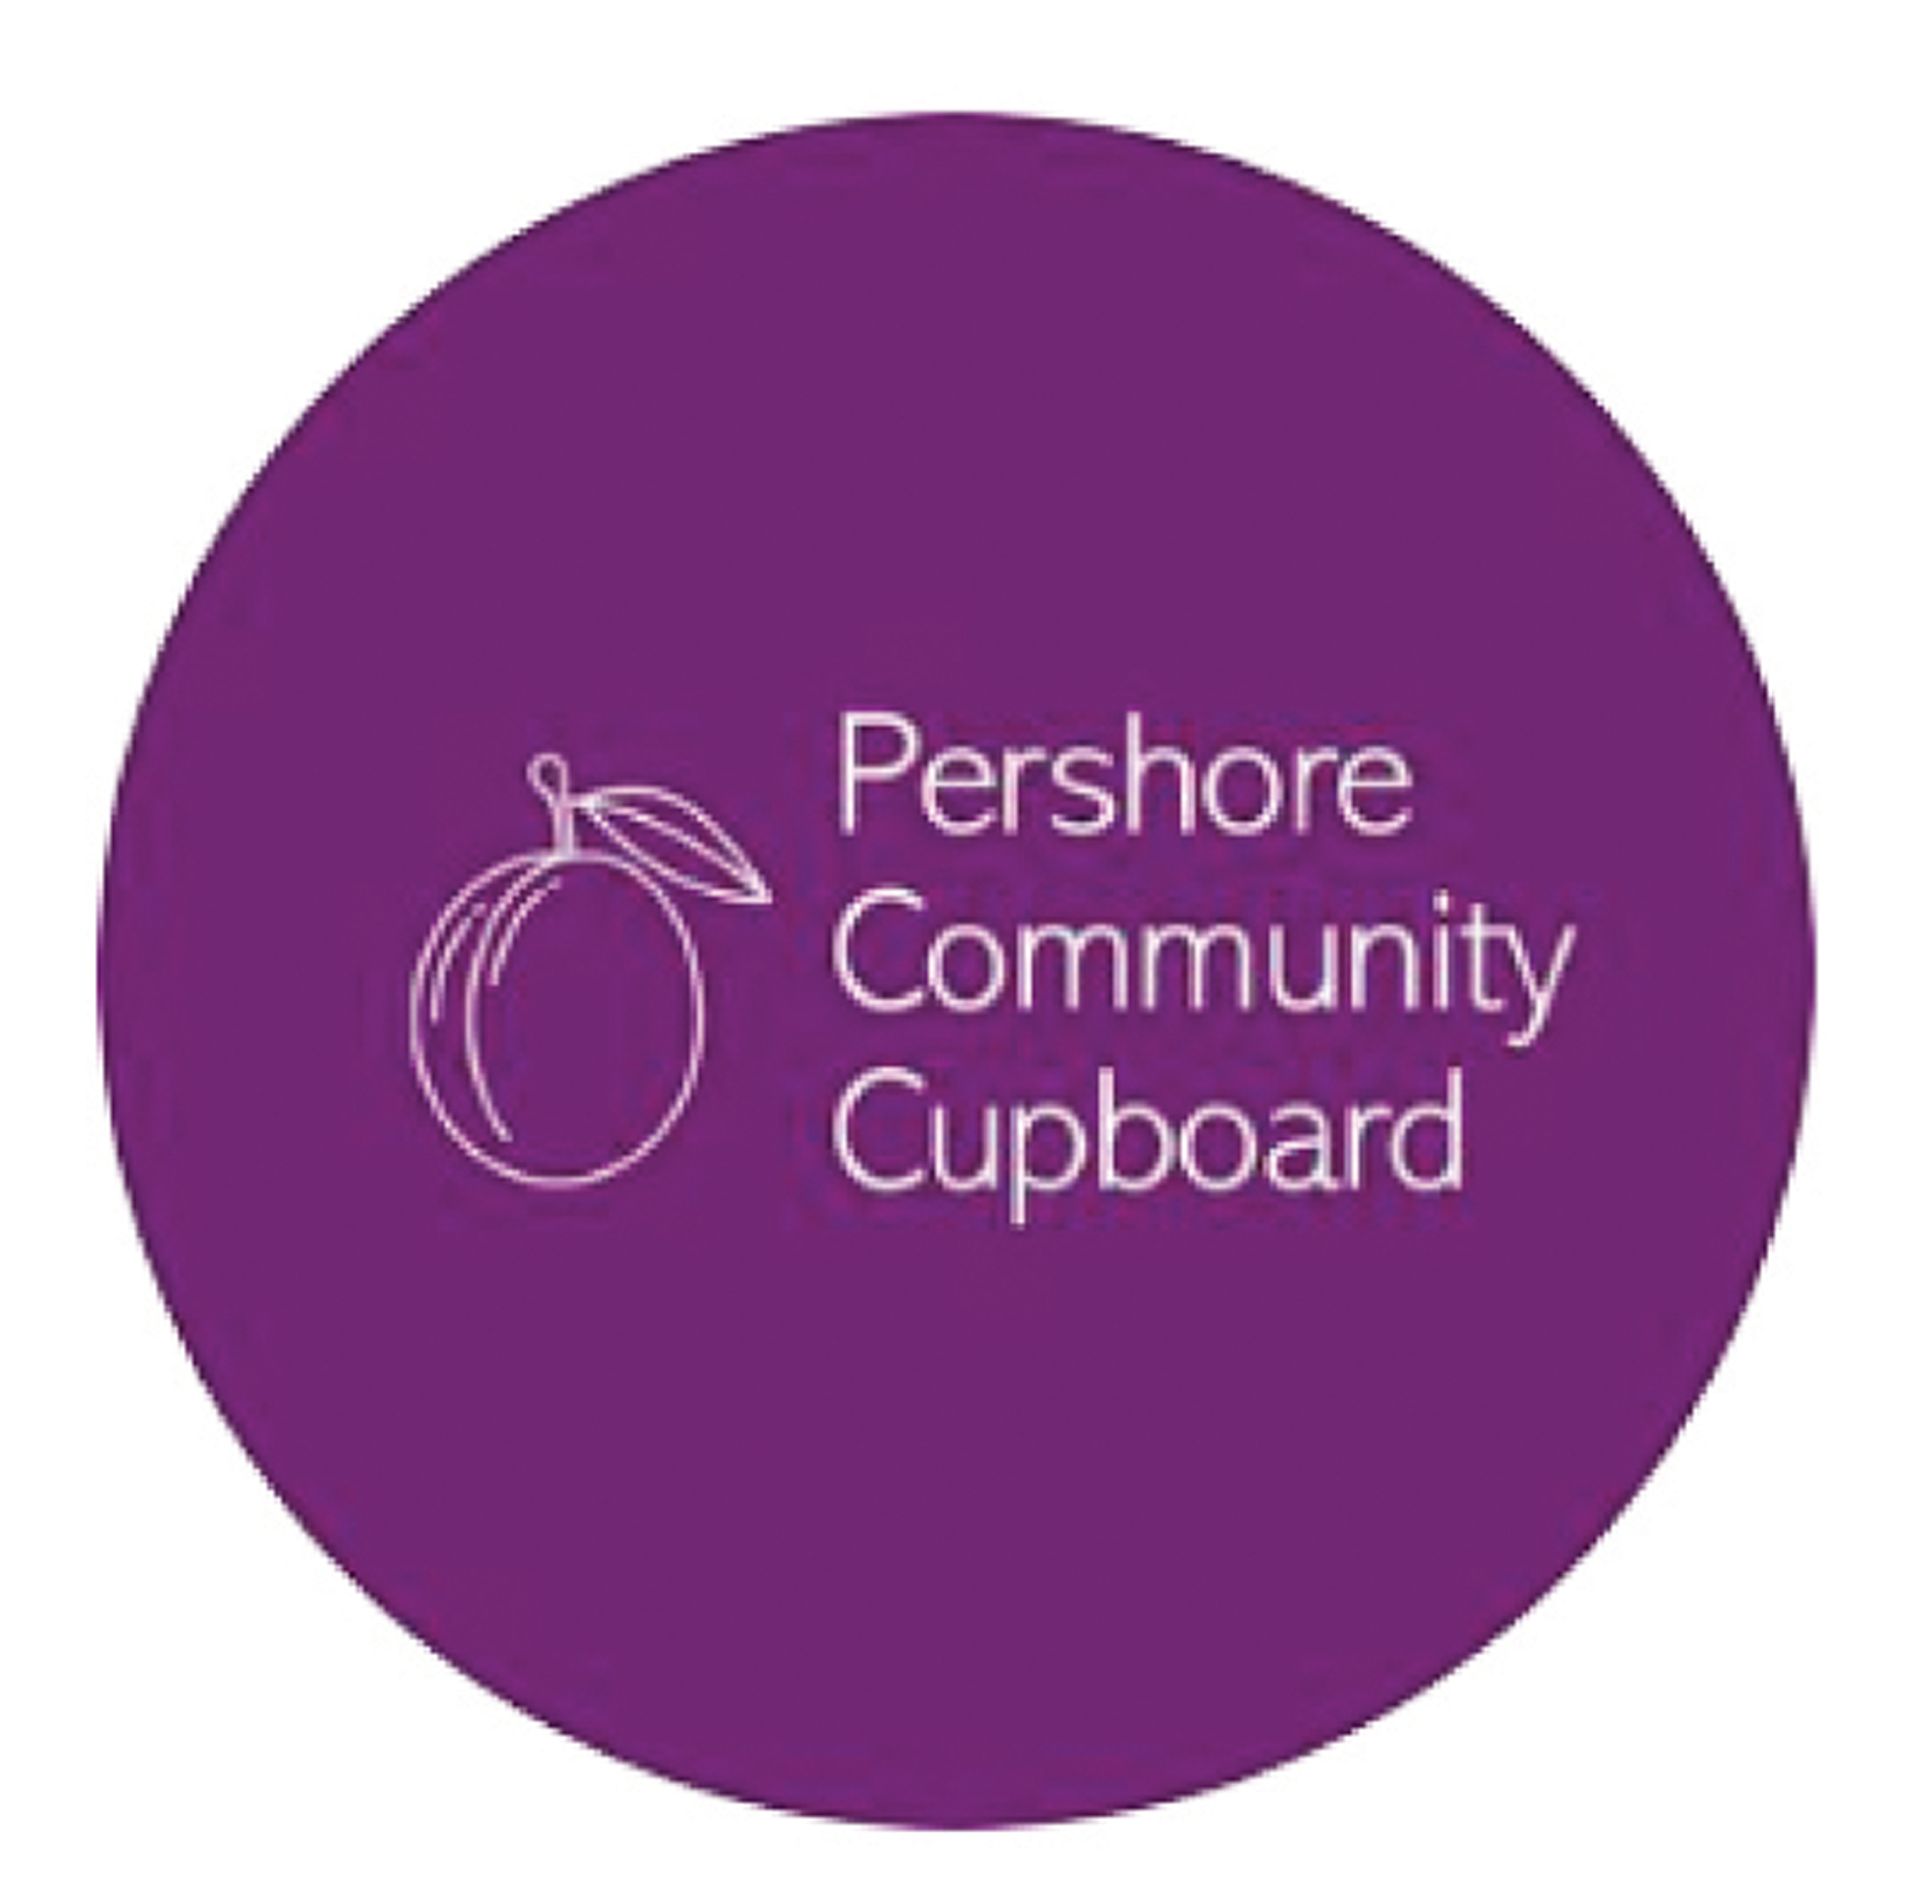 Pershore Community Cupboard